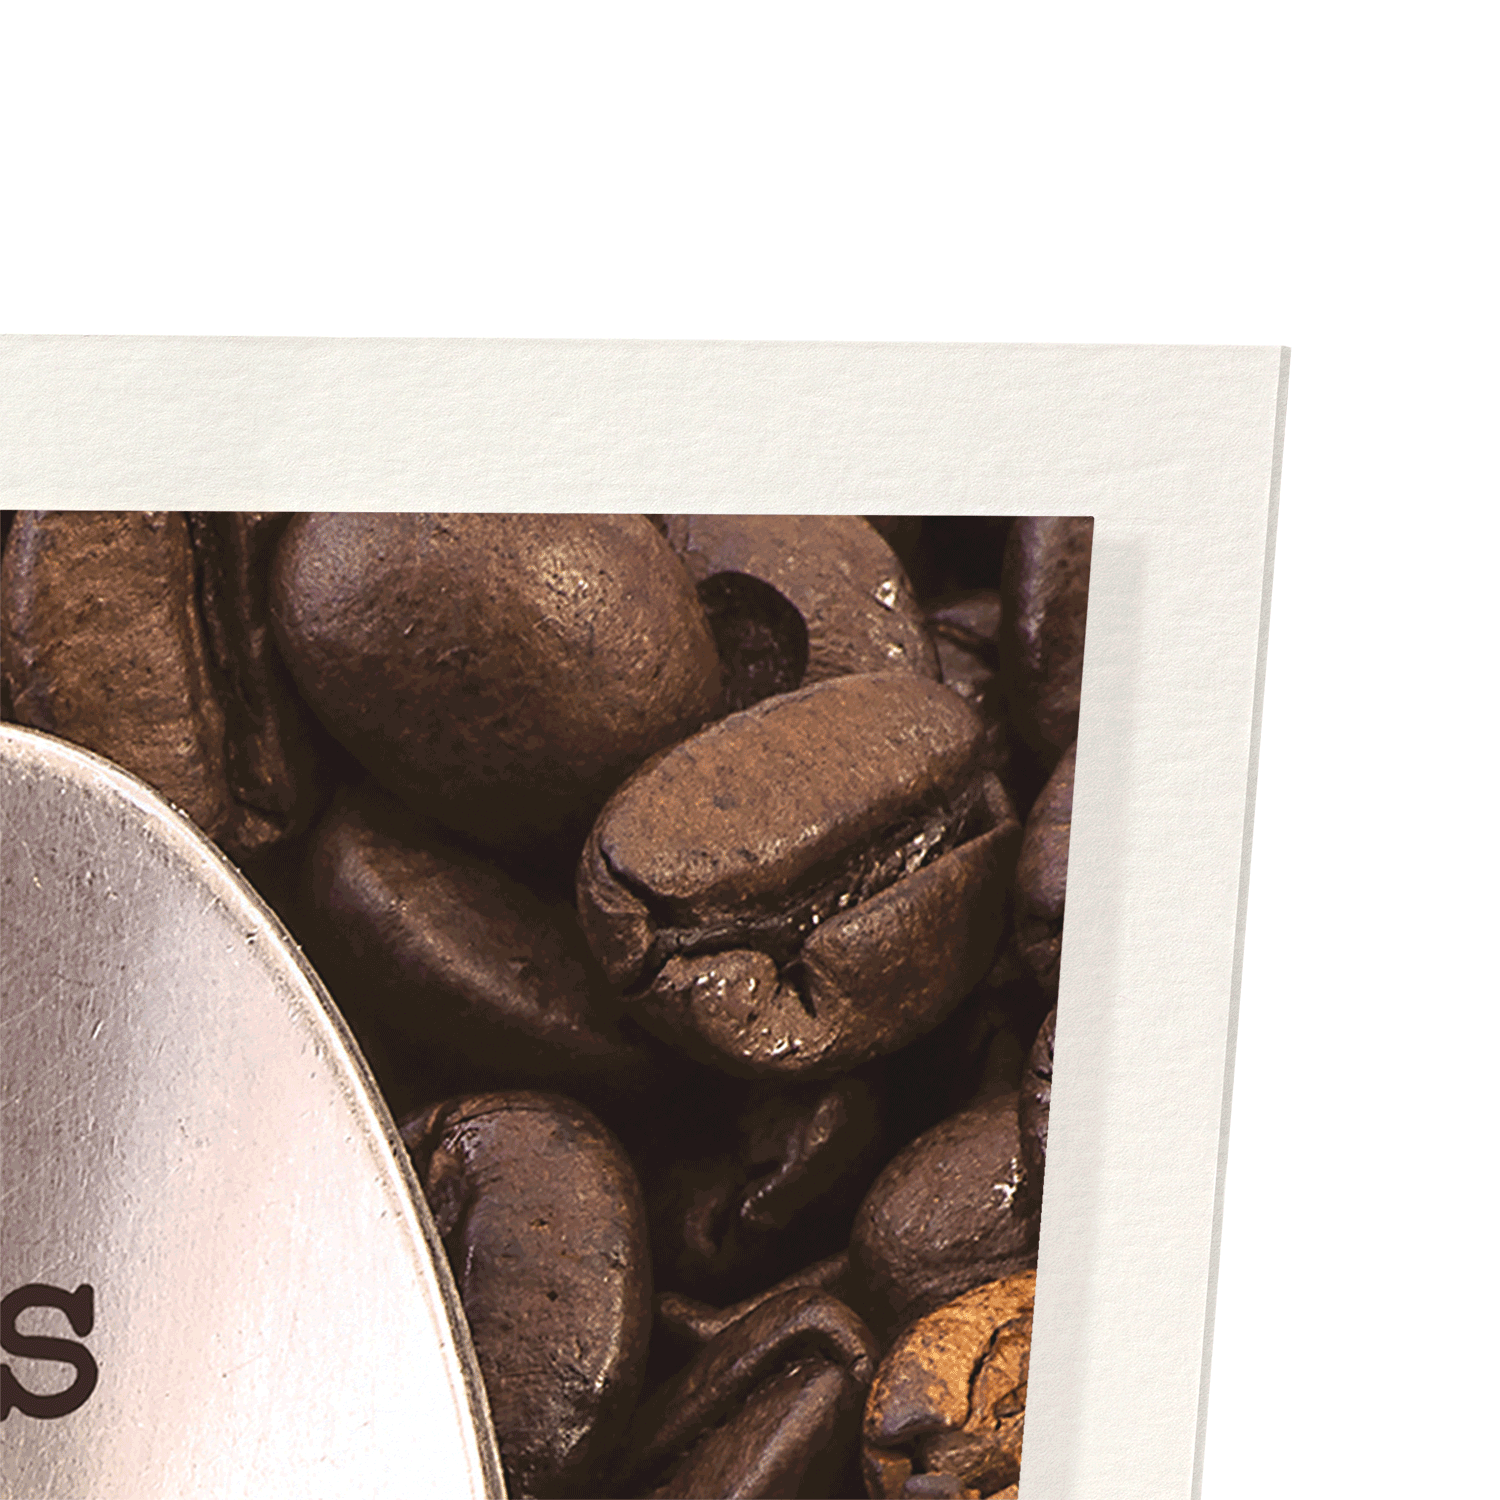 COFFEE O’CLOCK: Photo Art print